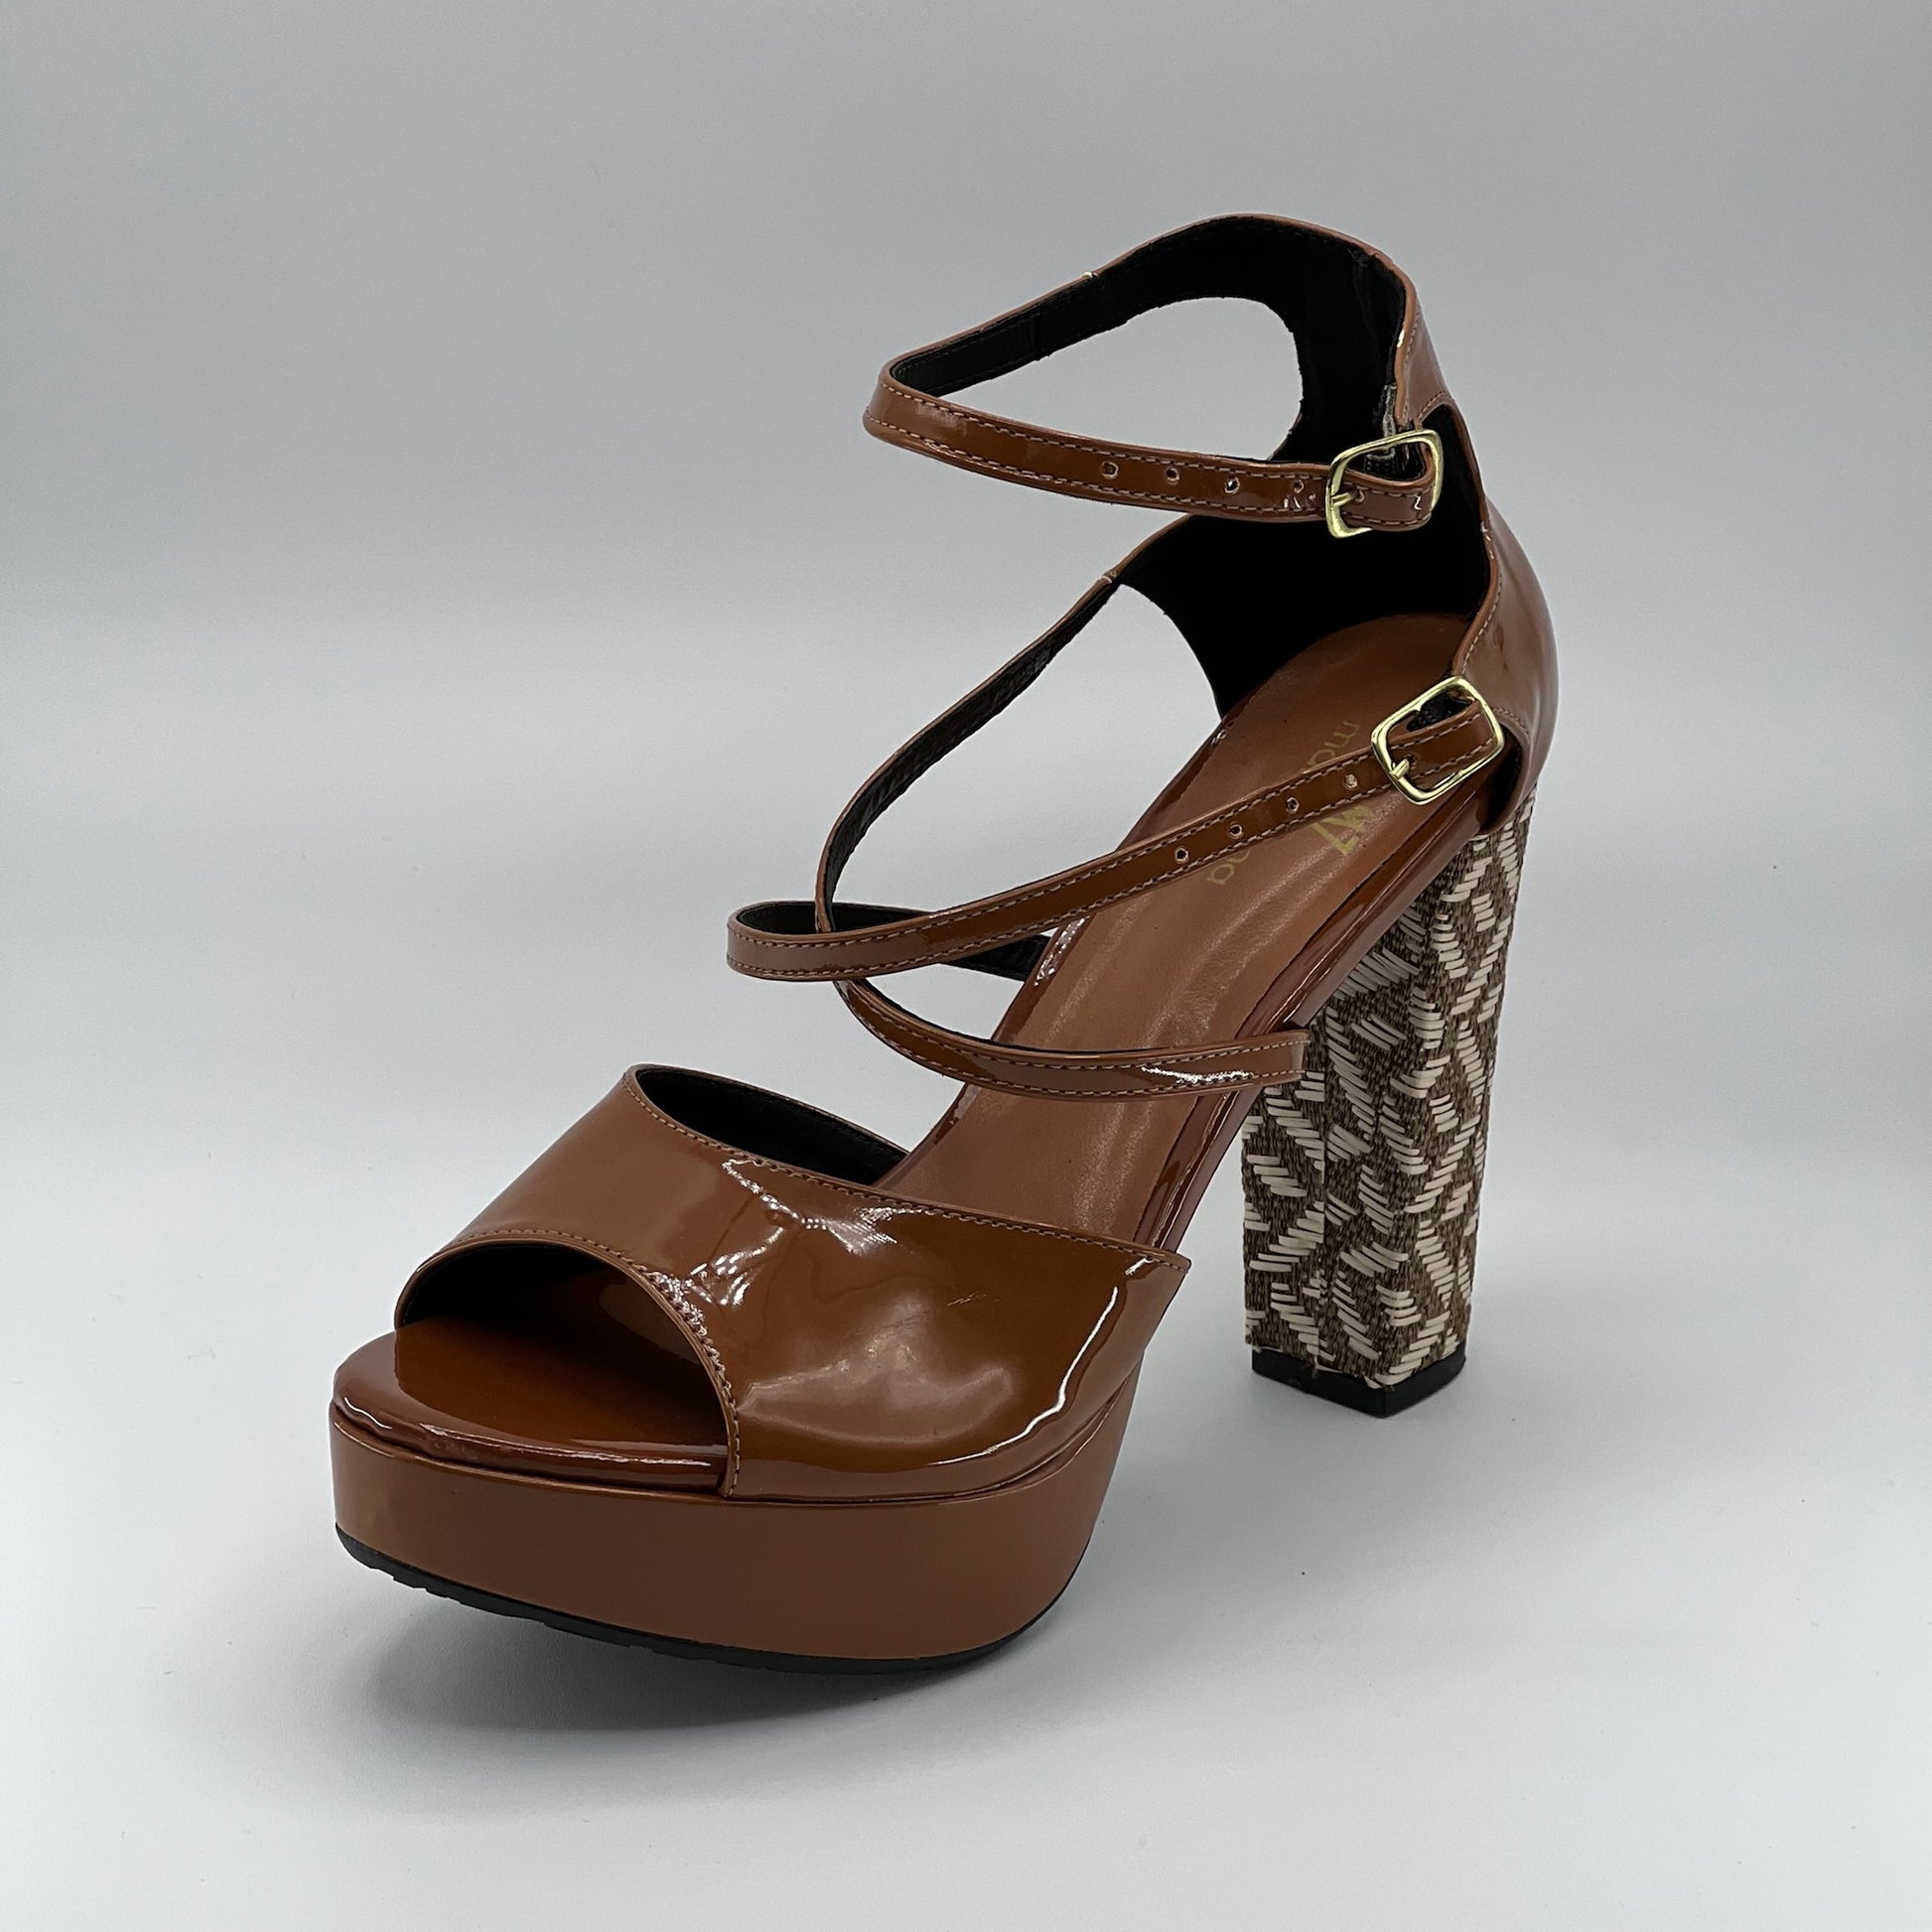 High heel, platform shoes, whisky color, VRS. Comfortable and sturdy. 